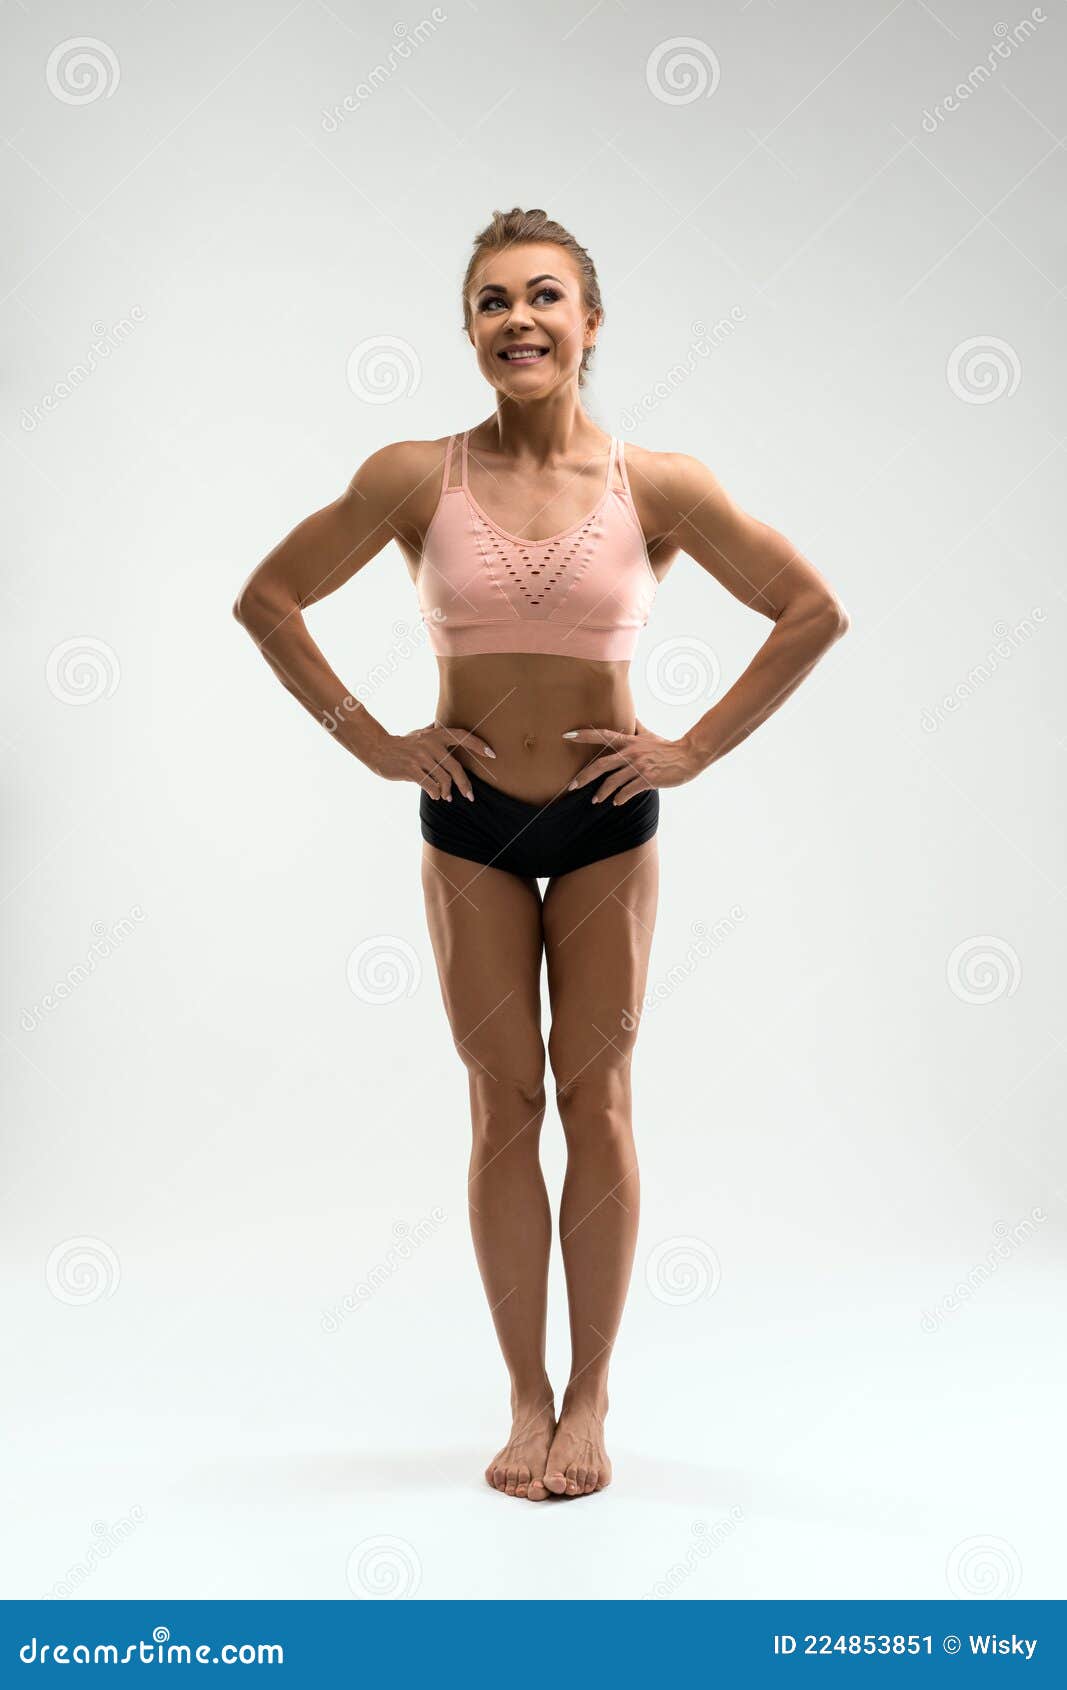 Happy Fit Woman in Sports Underwear Standing in Studio Stock Image